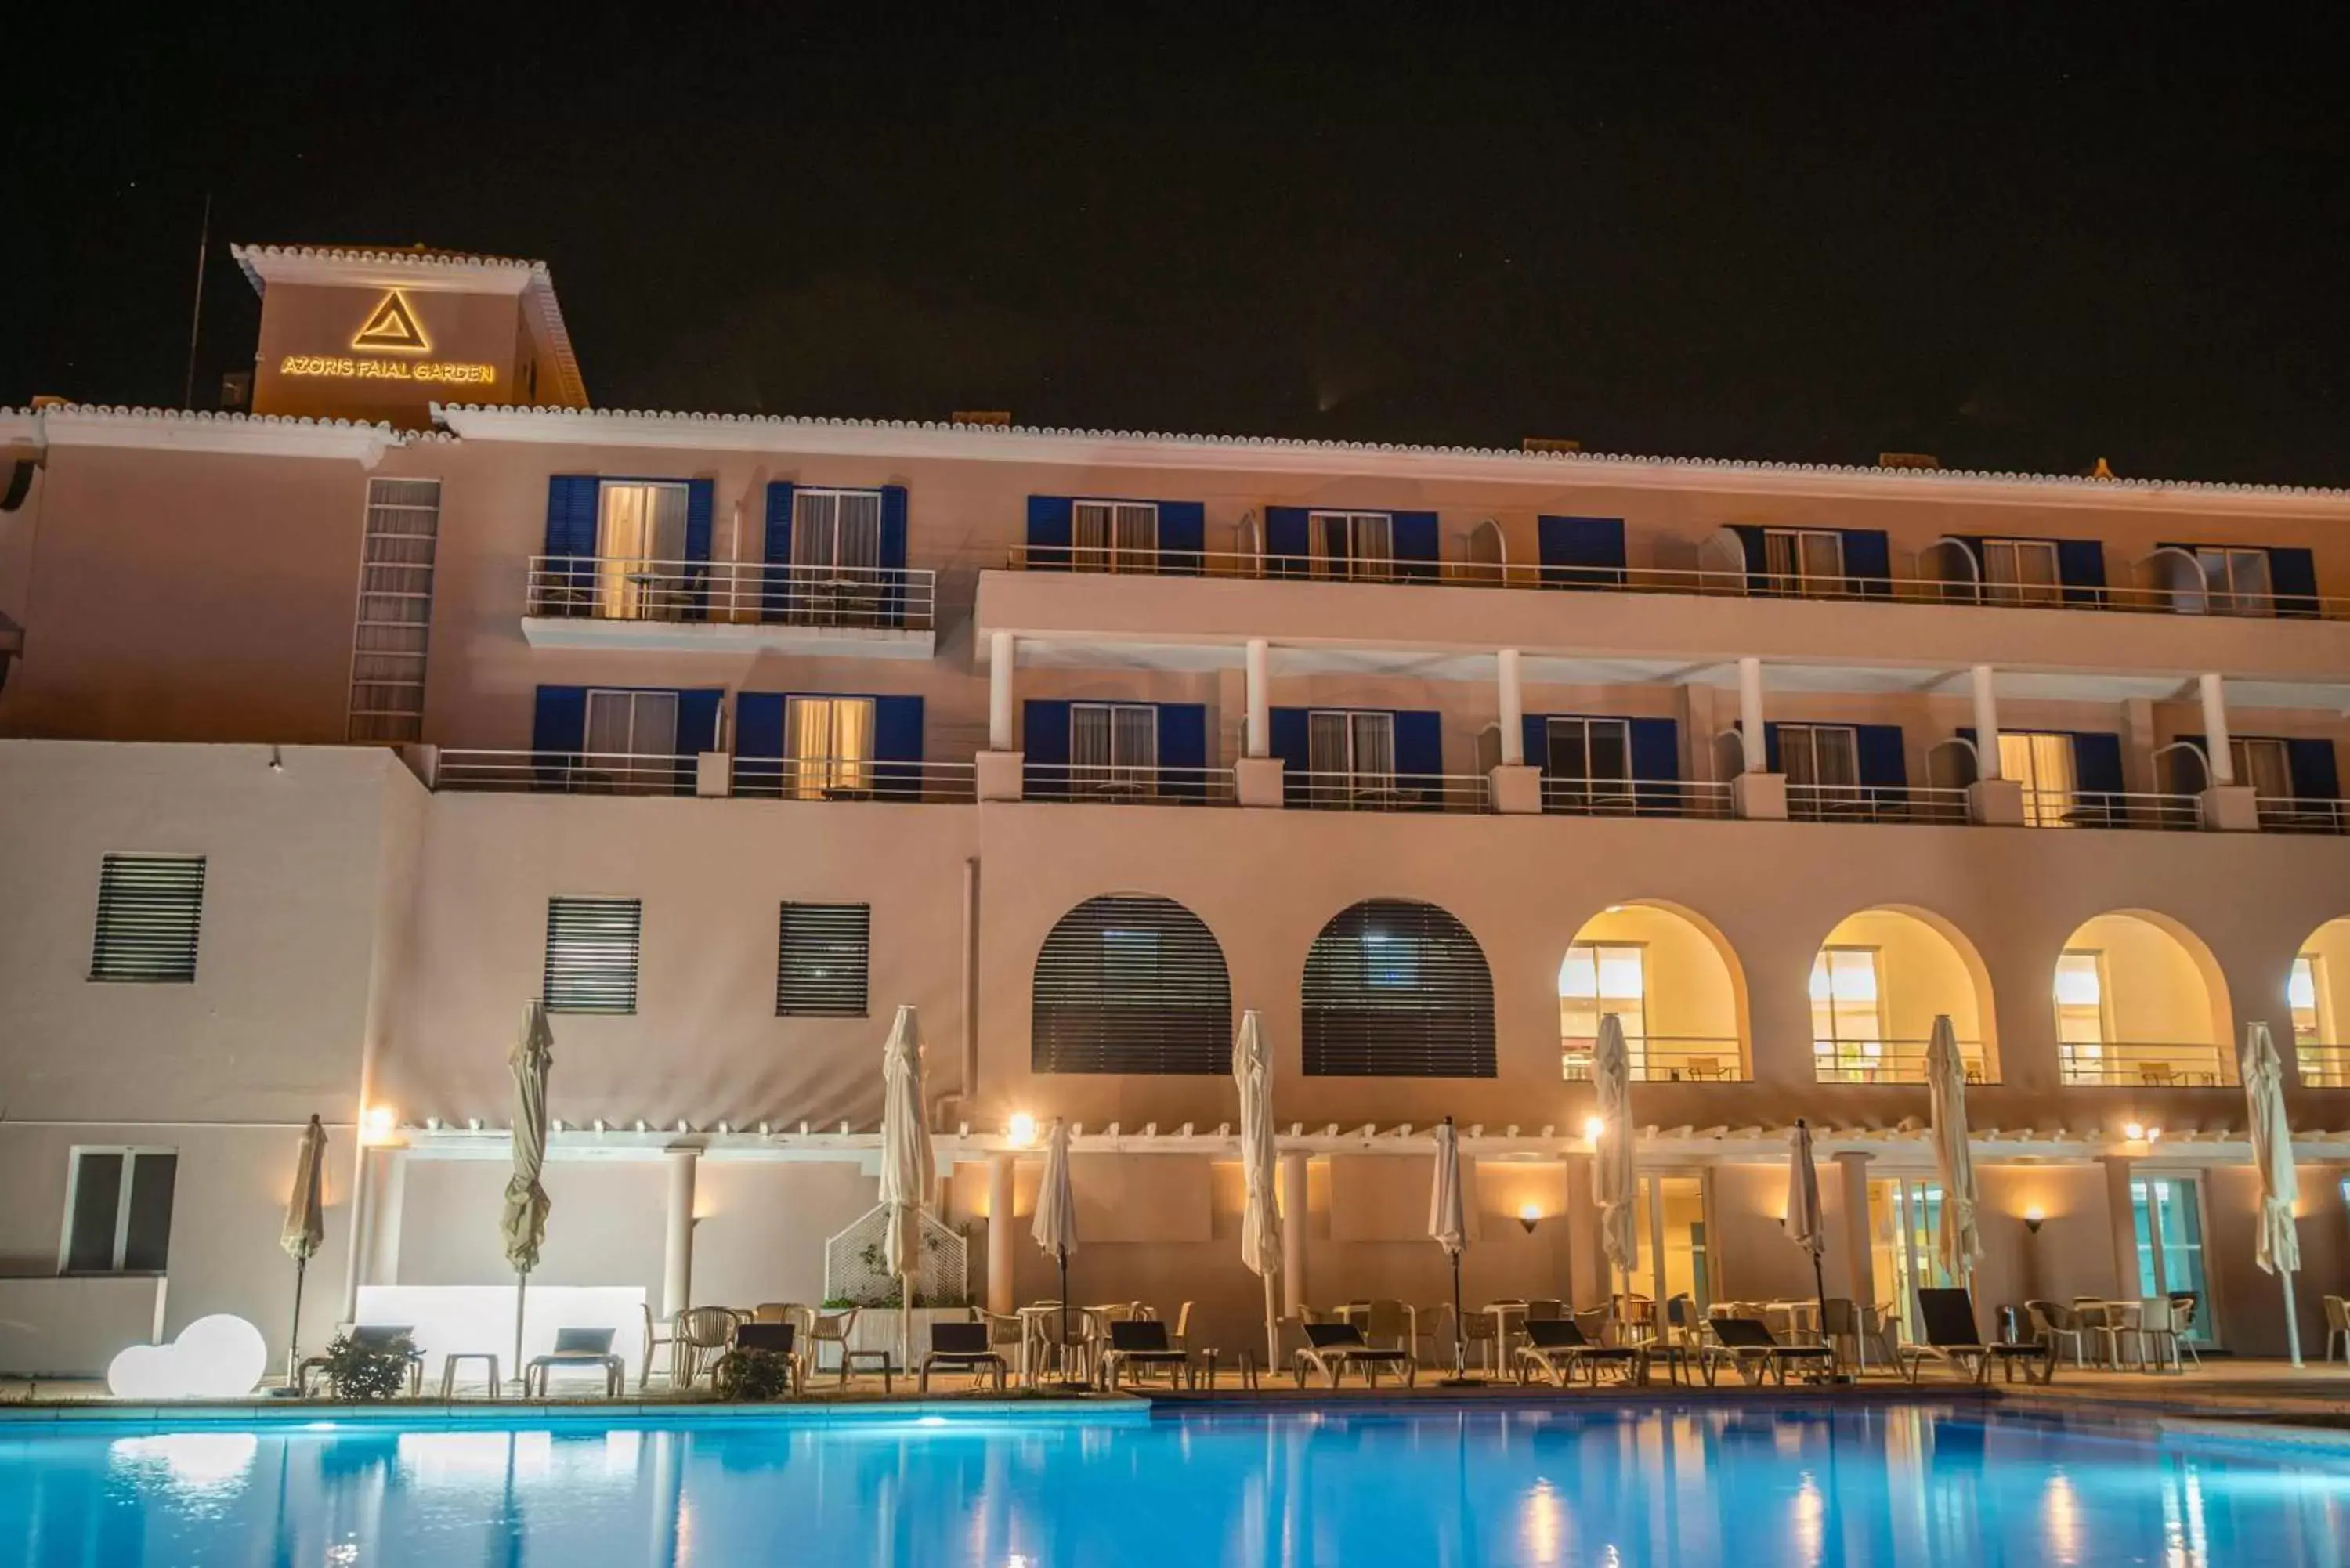 Property Building in Azoris Faial Garden – Resort Hotel